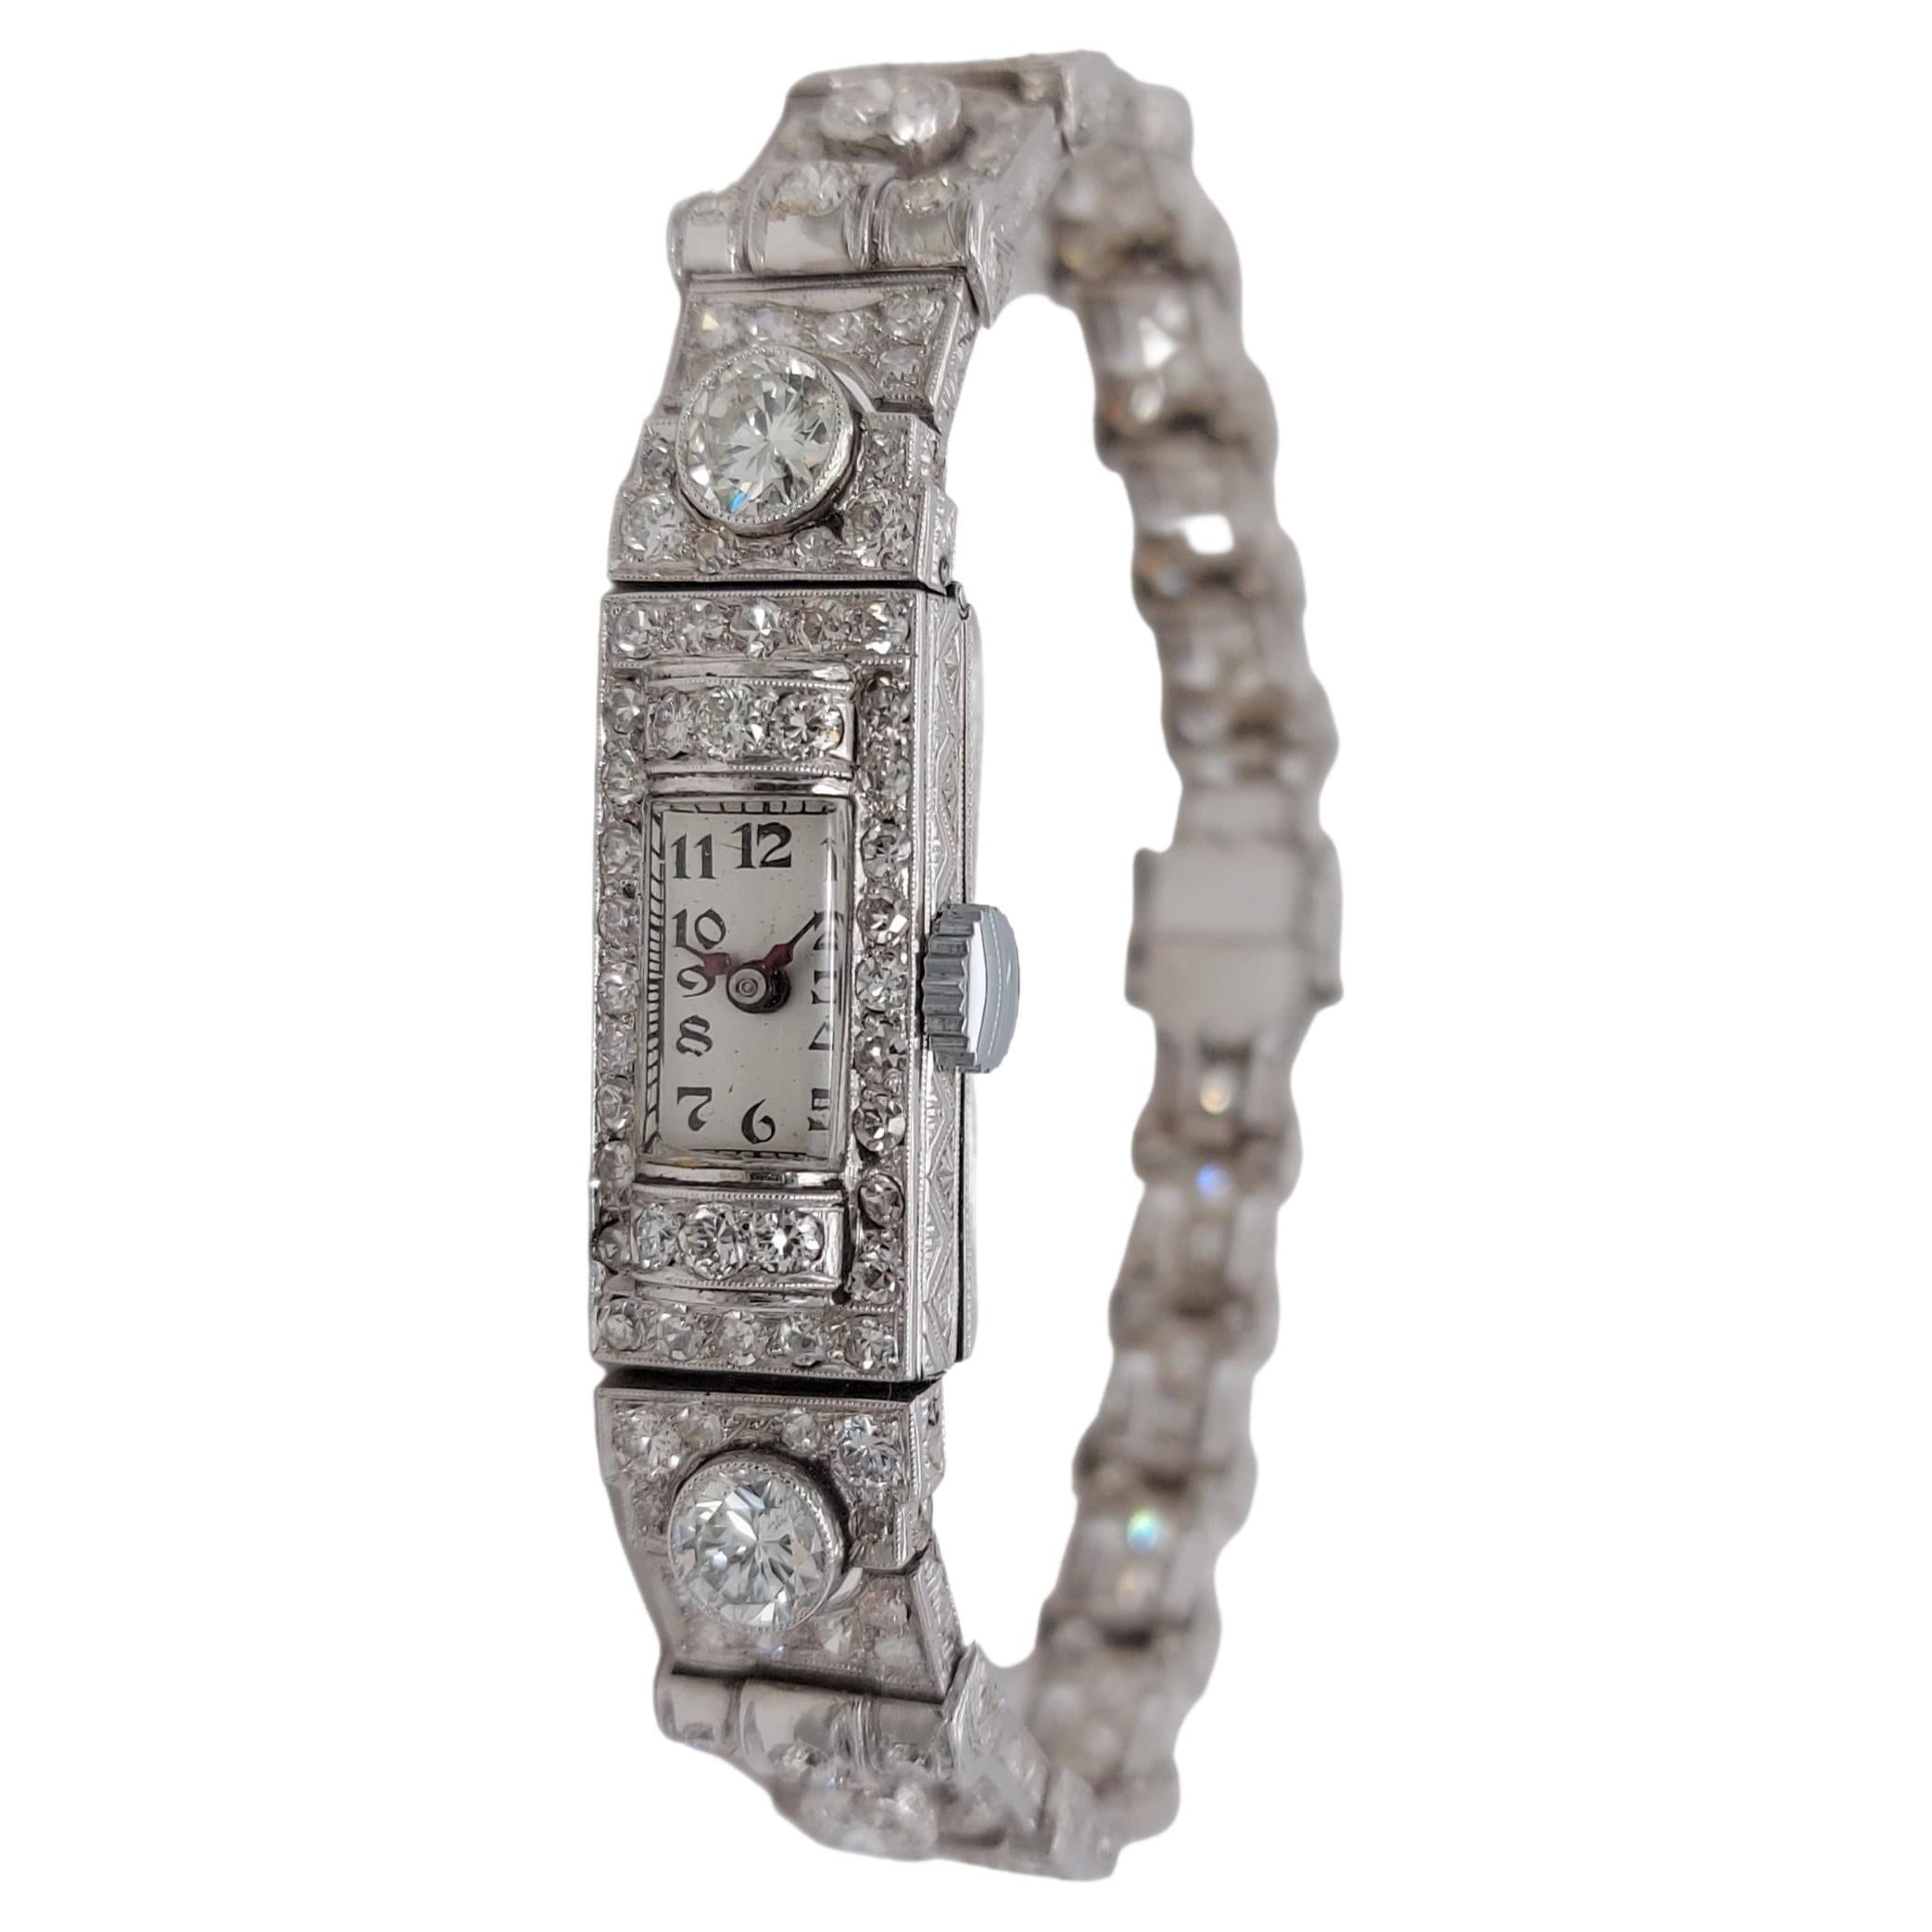 Beautiful Platinum Diamond Bracelet Dress Watch with Big Diamonds